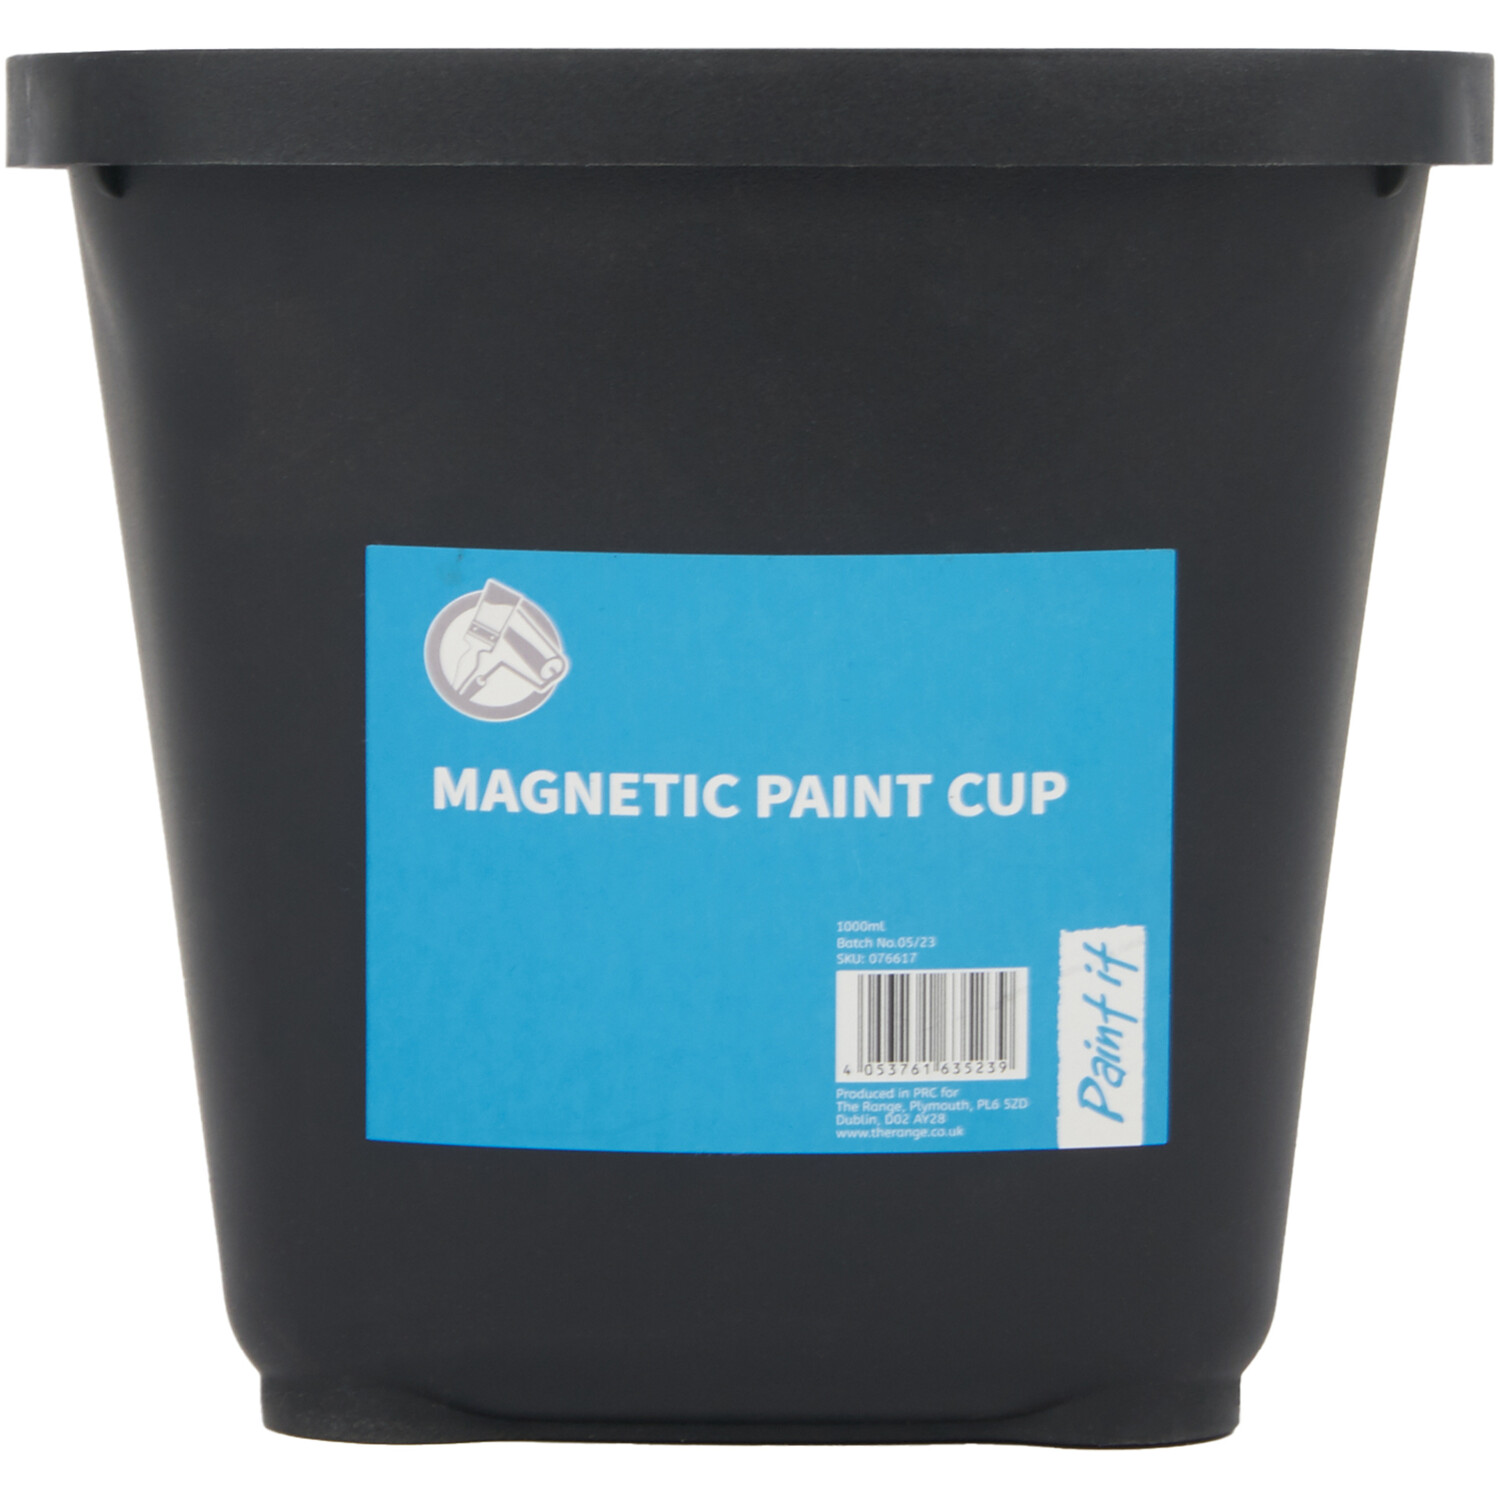 Magnetic Paint Cup - Black Image 4